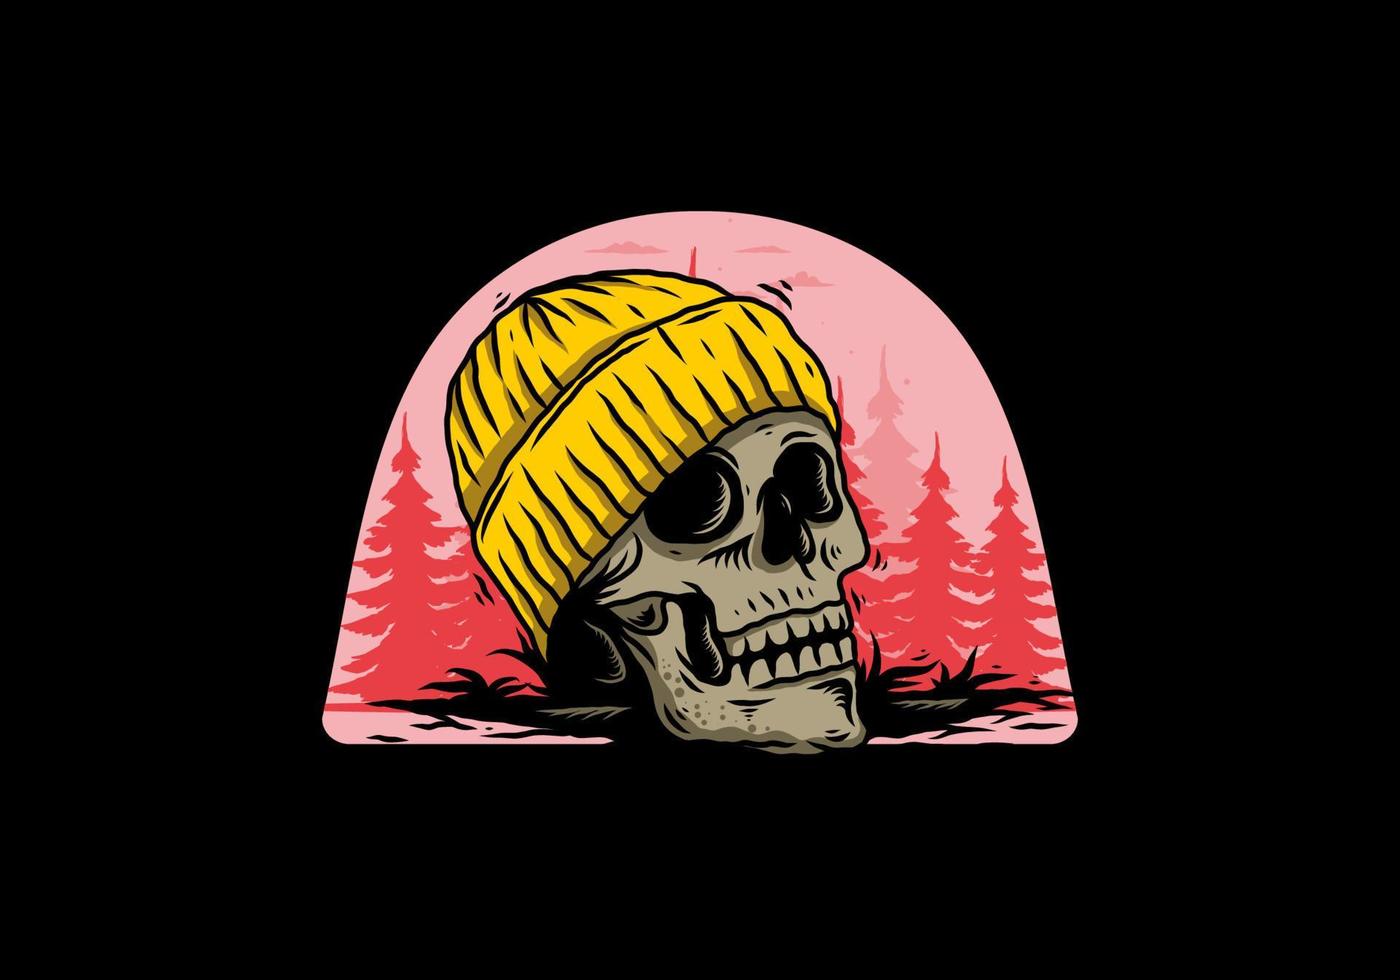 Skull head wearing beanie illustration design vector